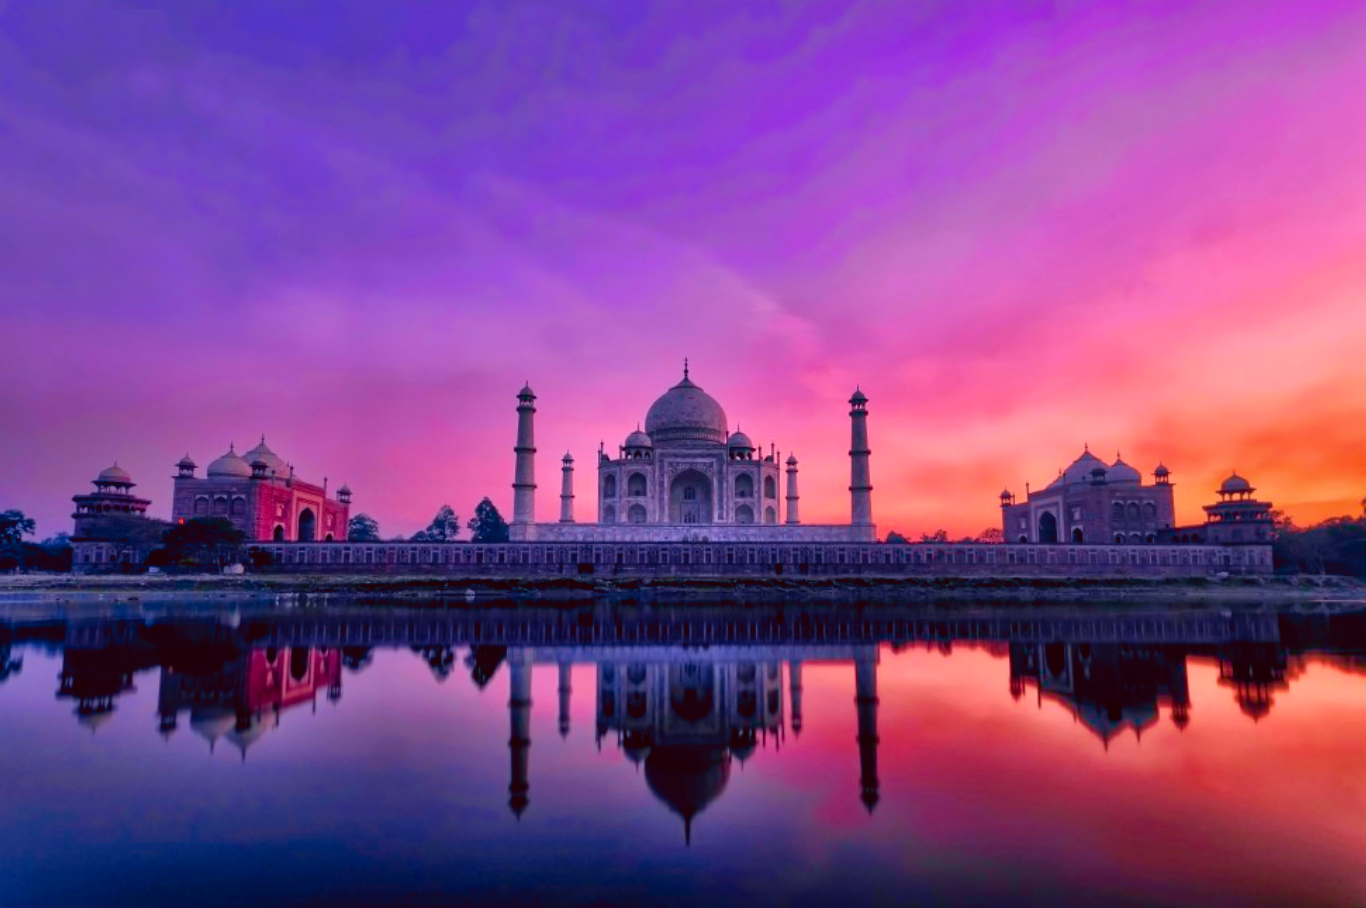 Taj Mahal Google Search Image